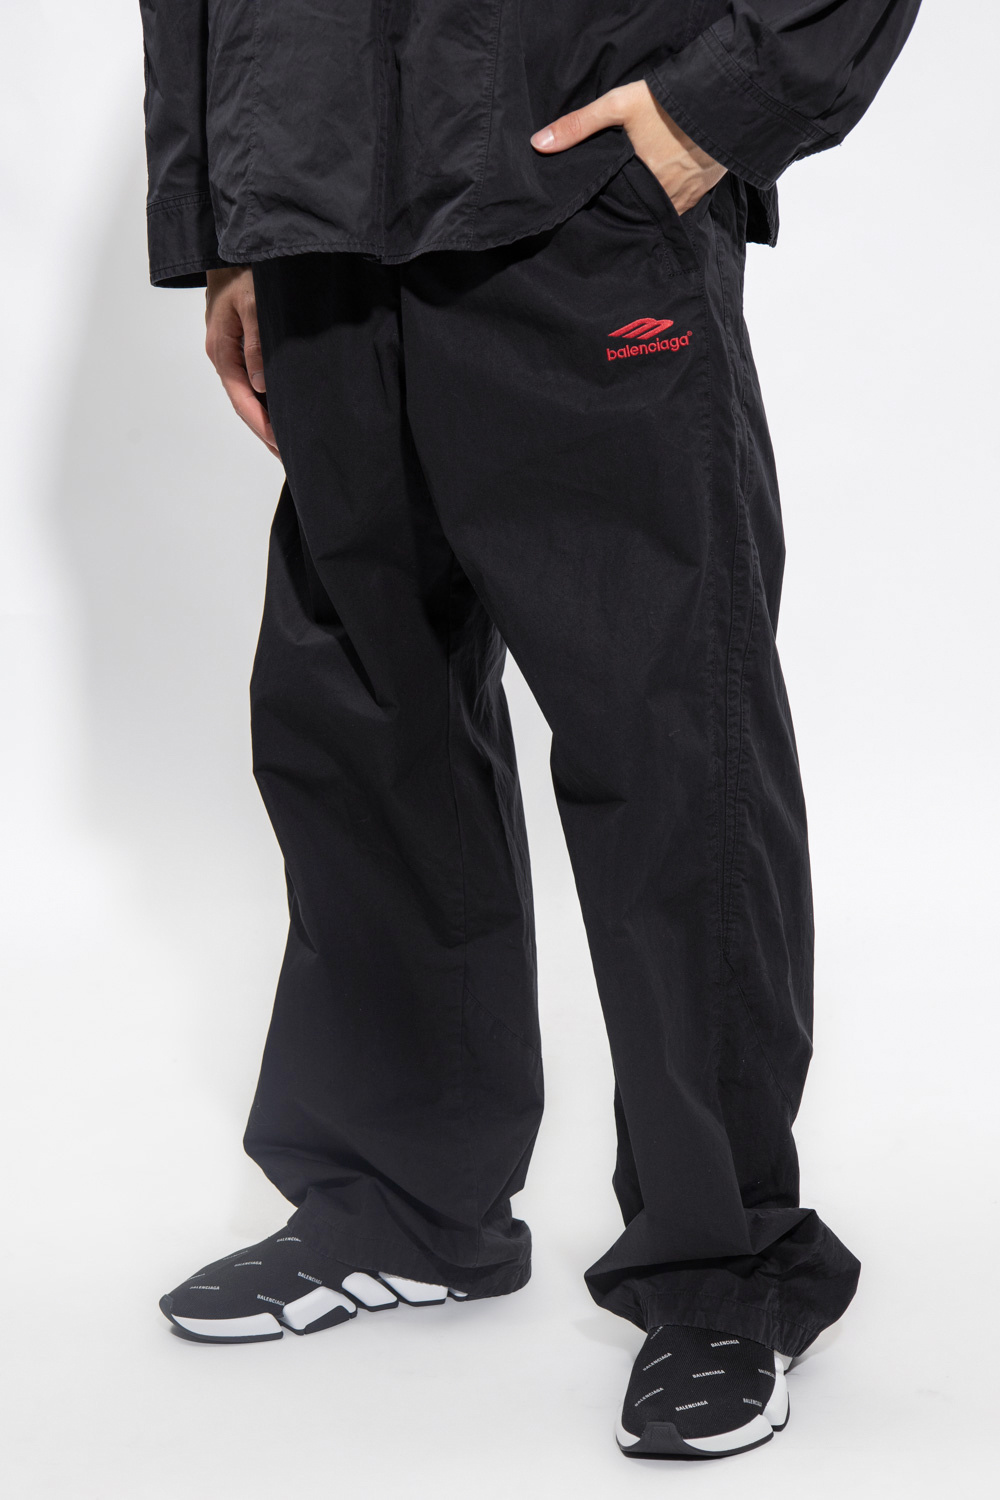 Balenciaga Mini trousers with logo